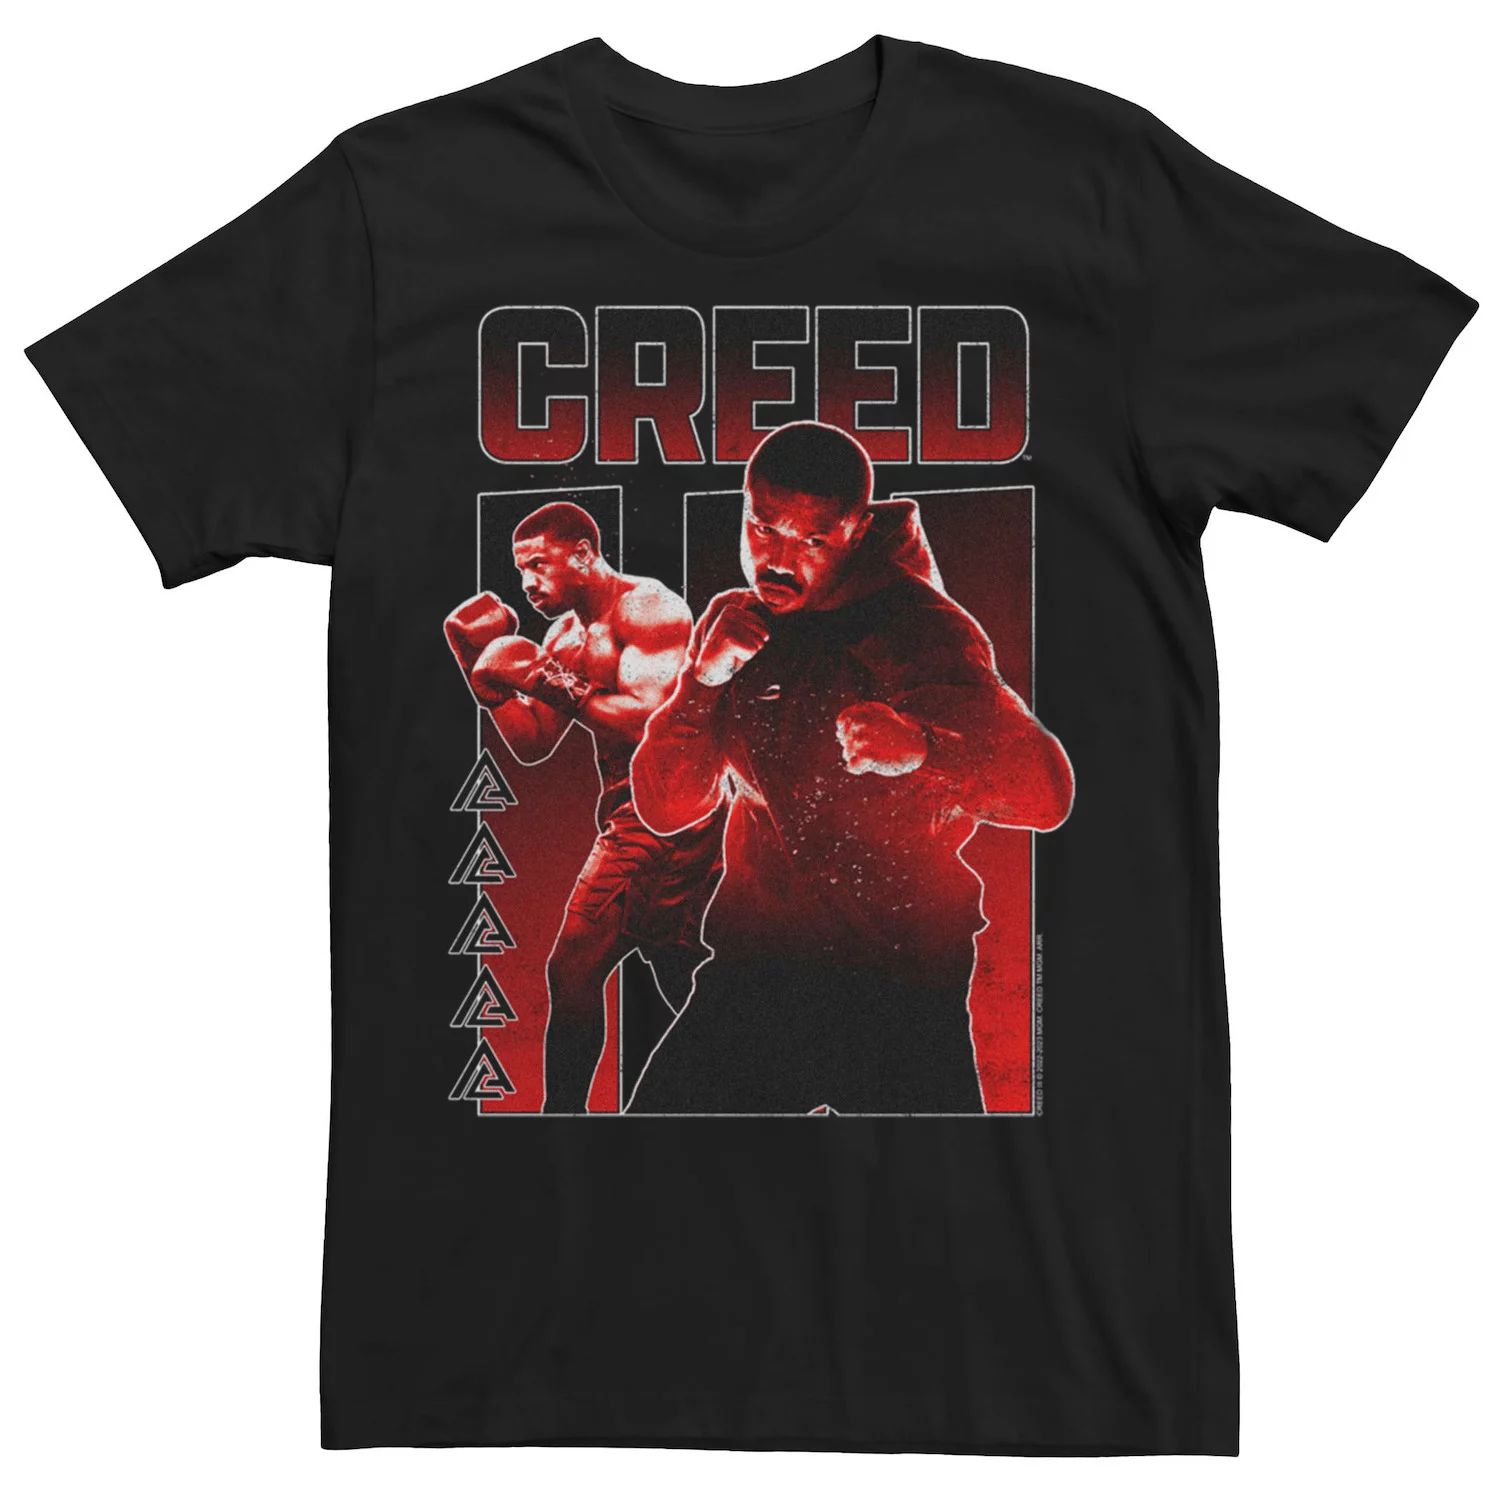 Мужская футболка Creed Adonis Creed с мультипозным плакатом и графическим рисунком Licensed Character